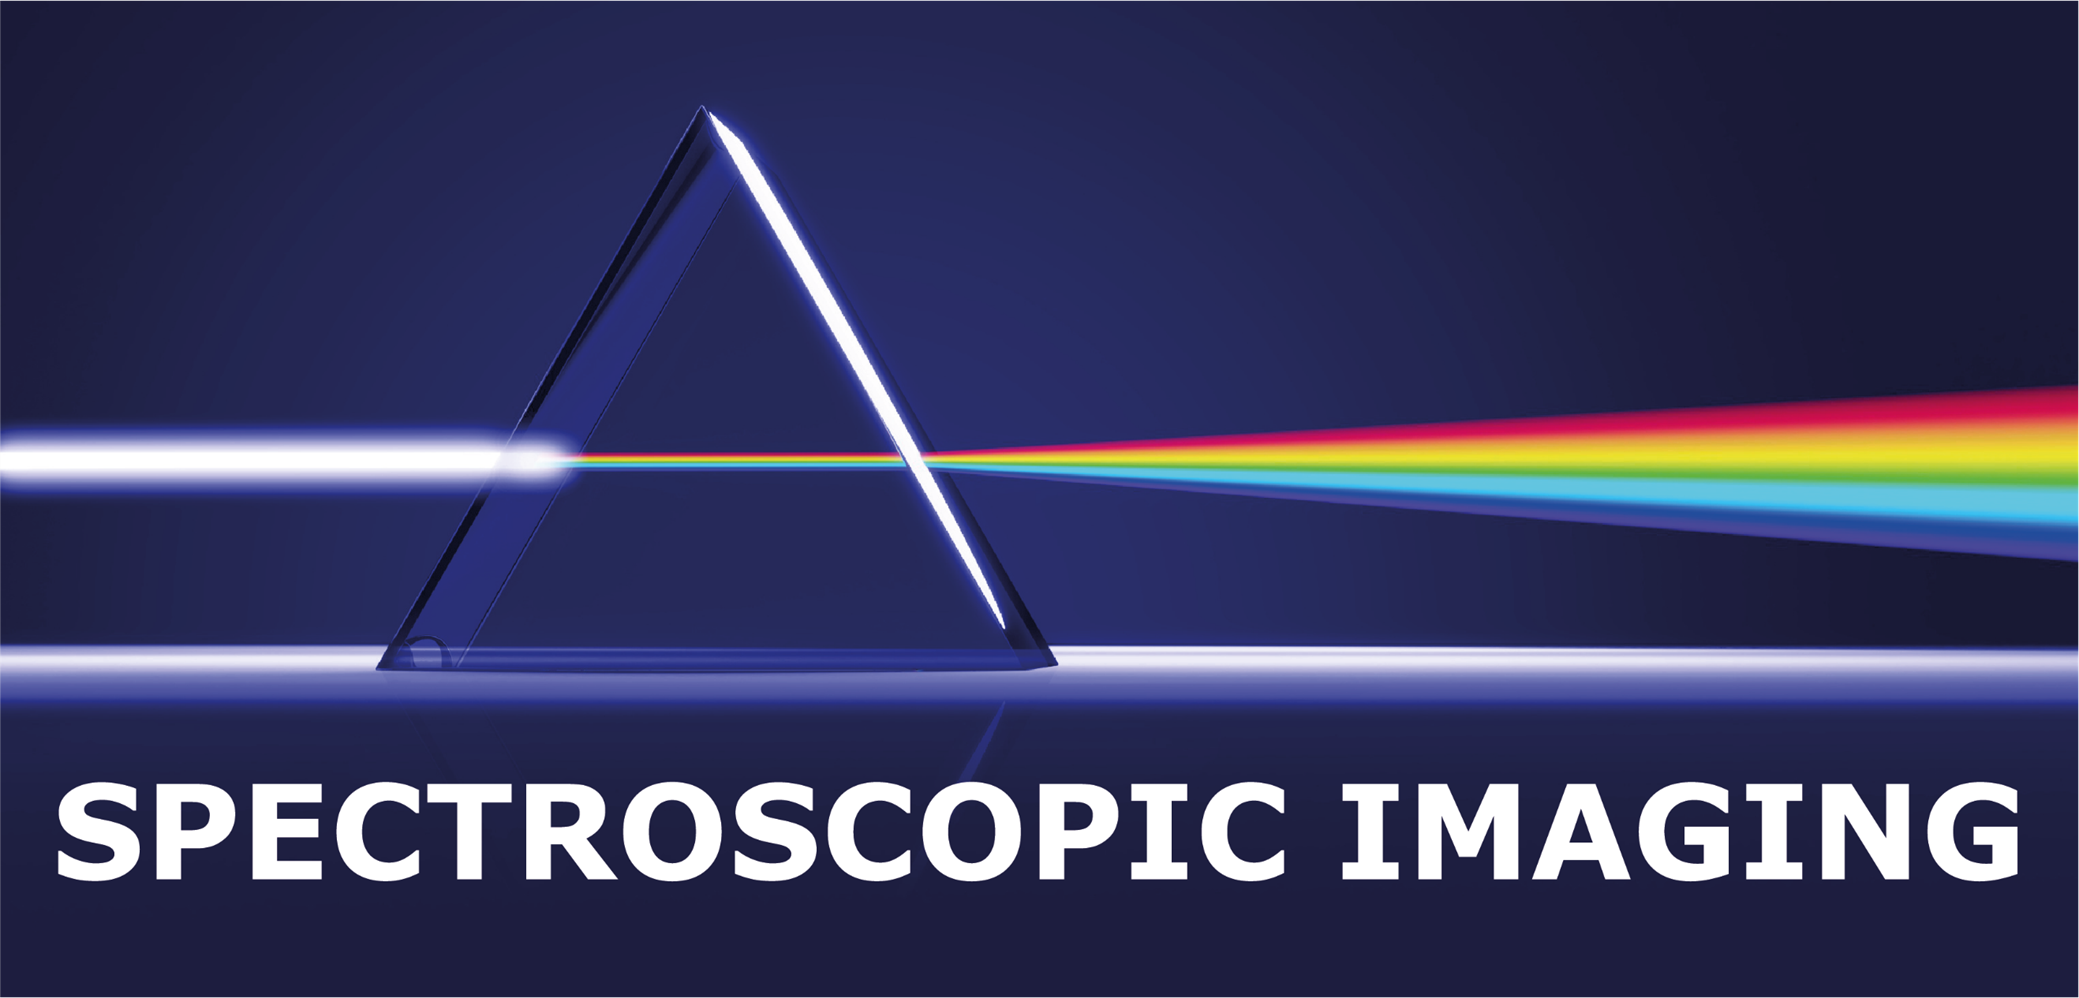 Logo spectroscopic imaging 02.png